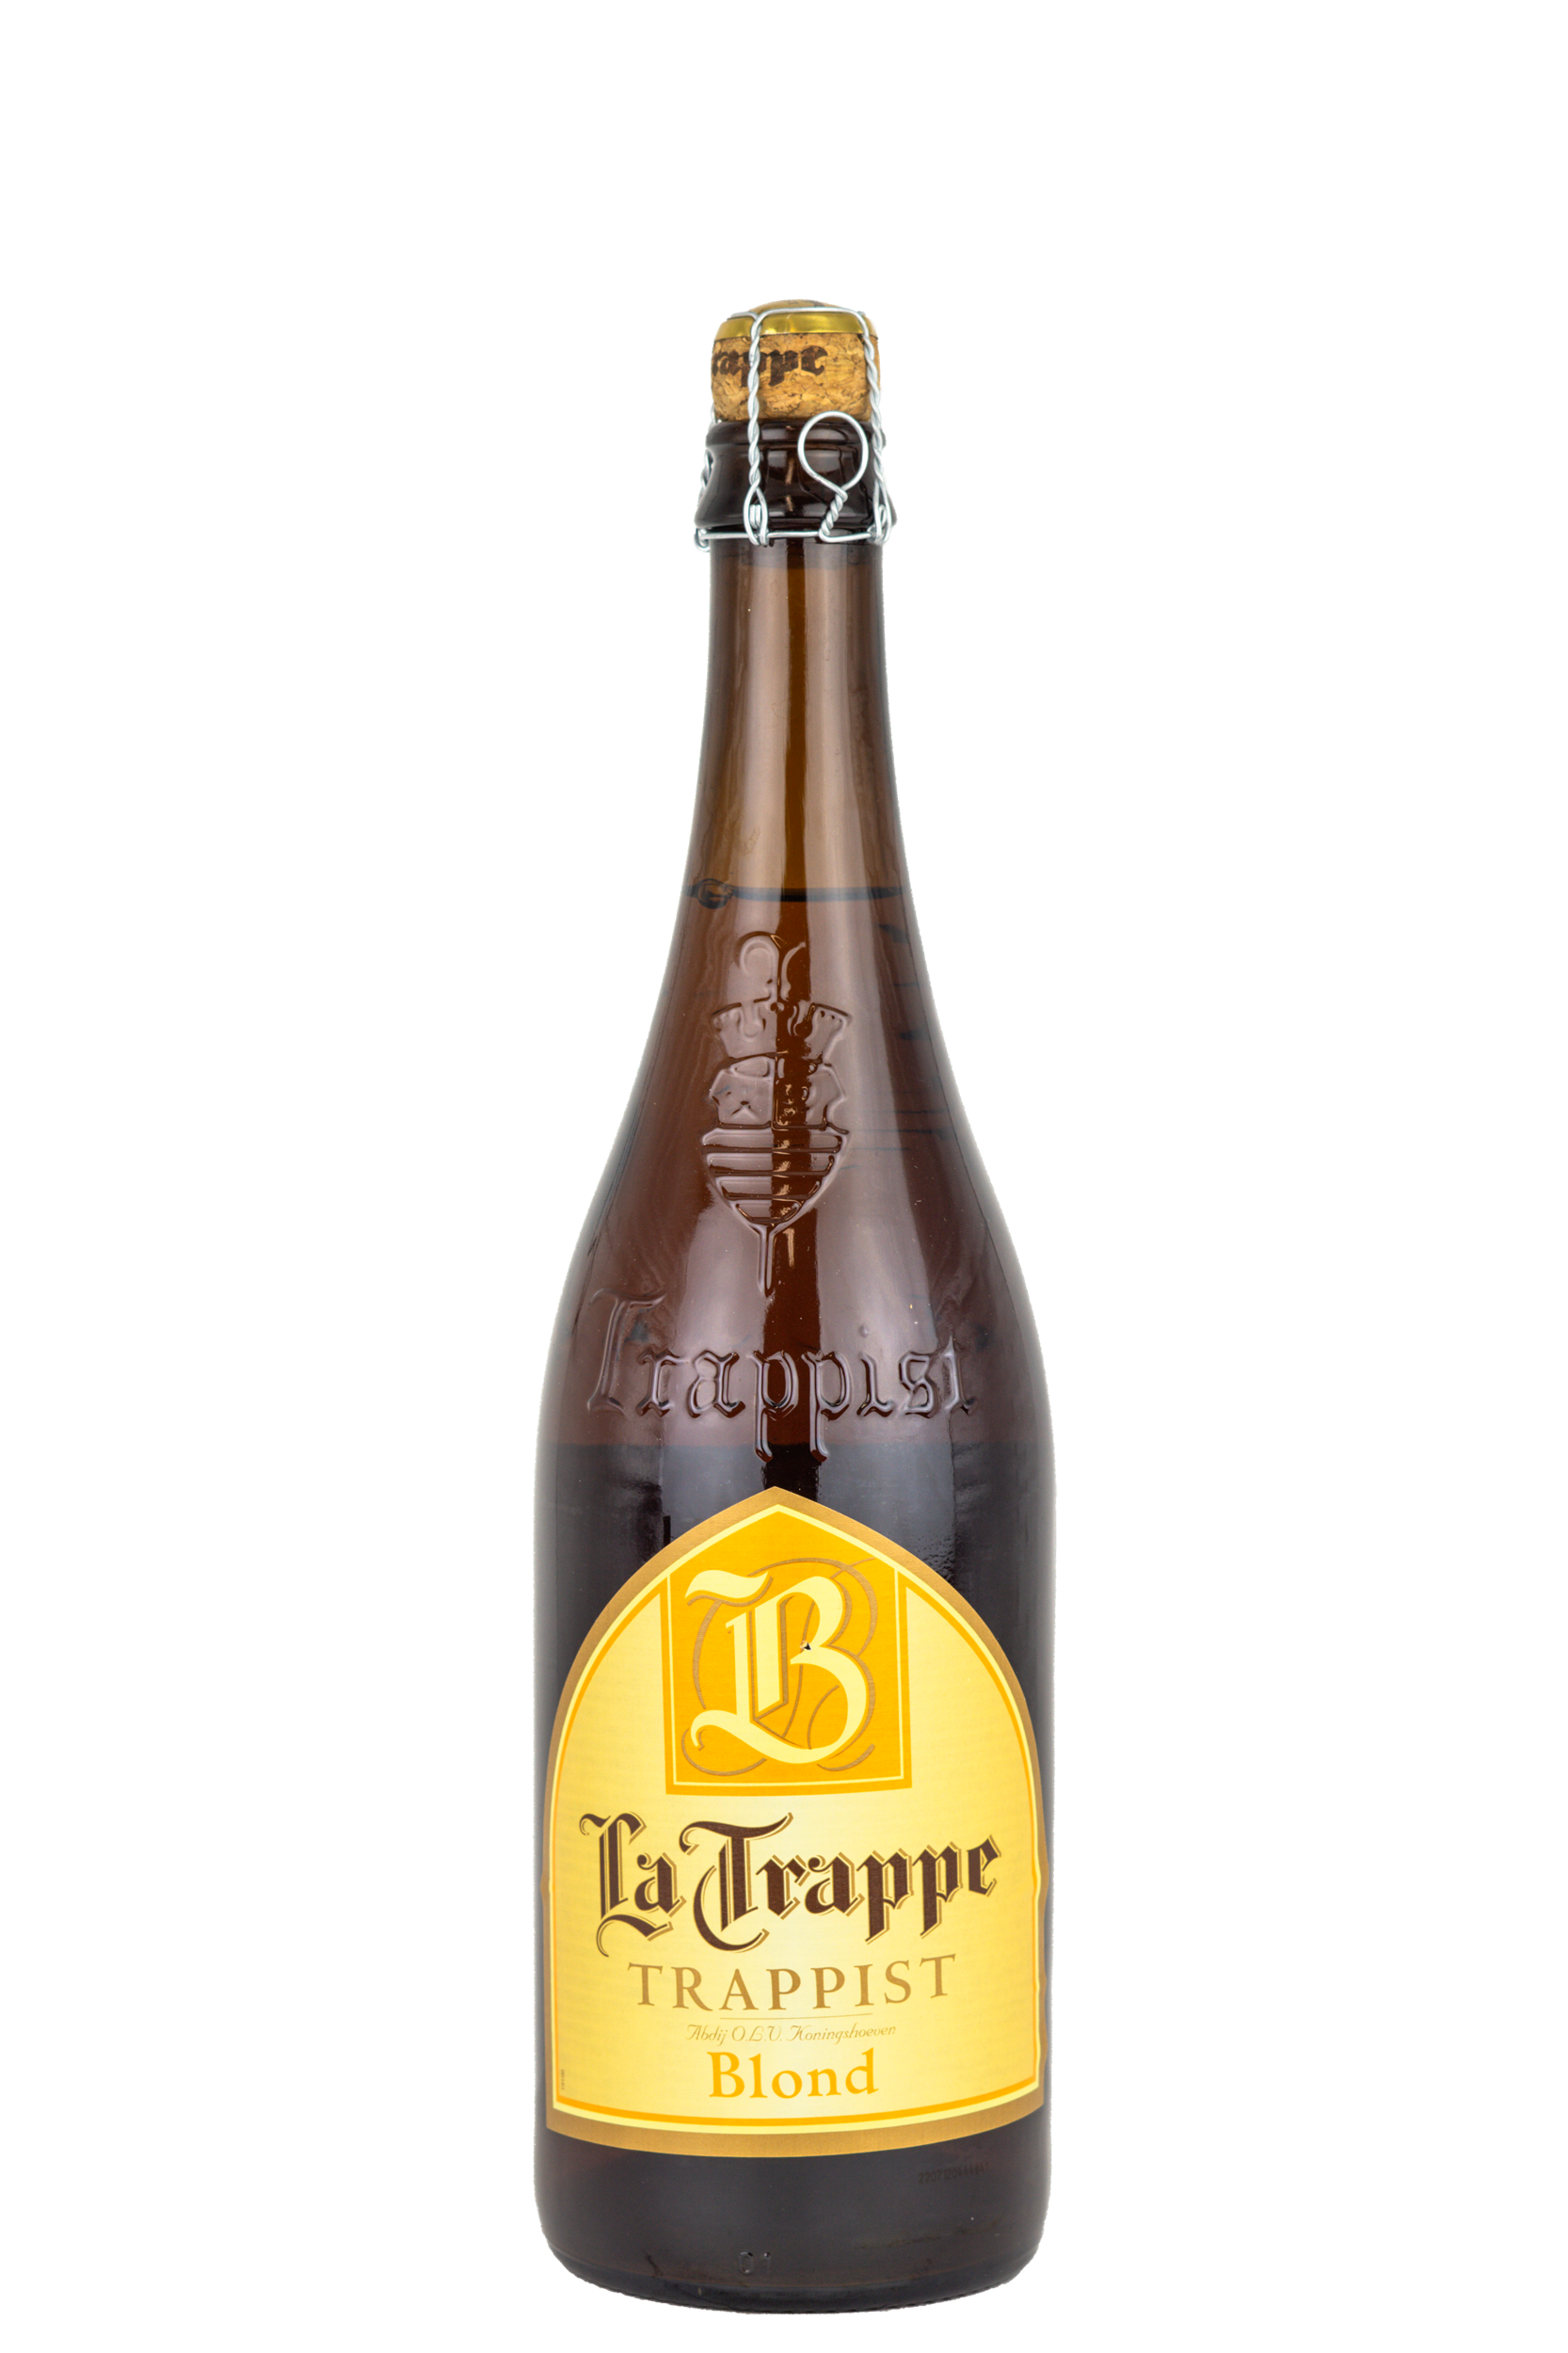 La Trappe Blond 33Cl